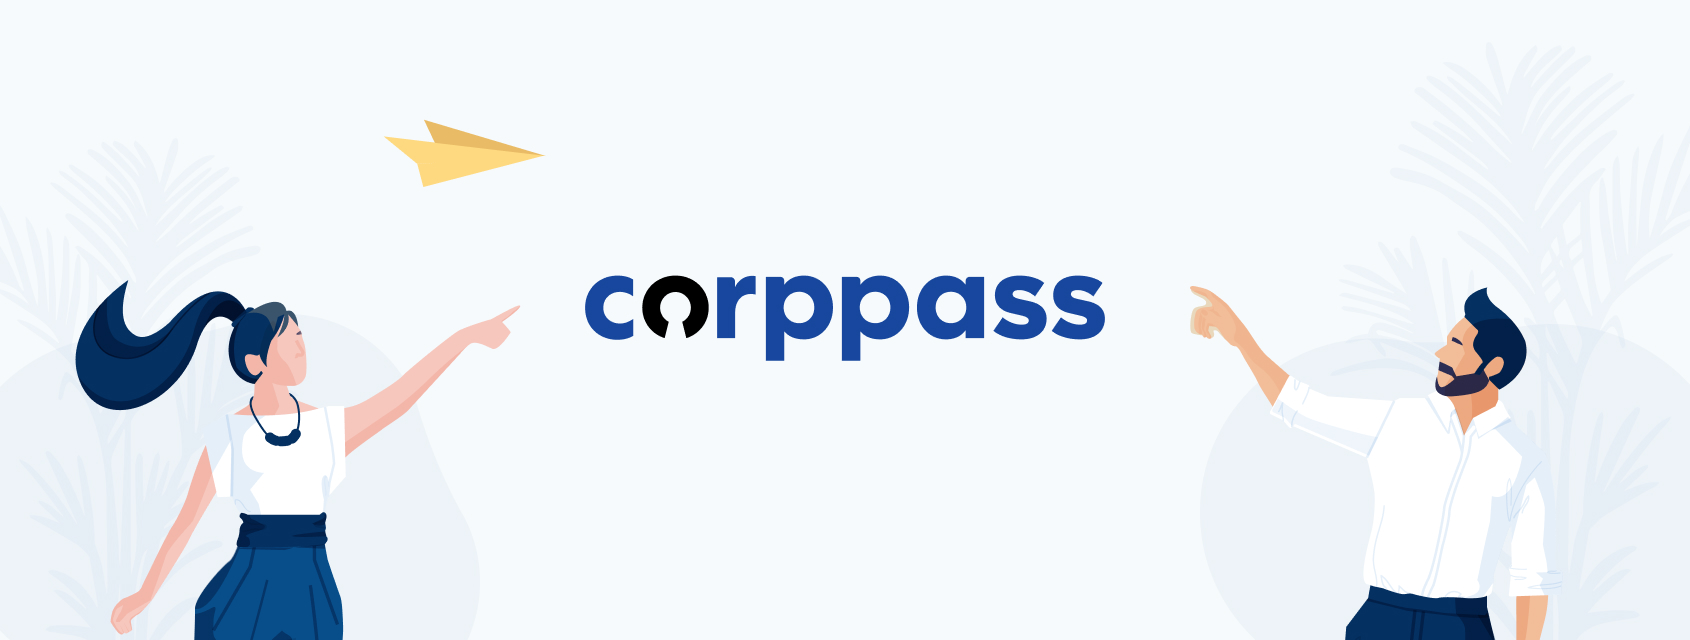 Image for Corppass